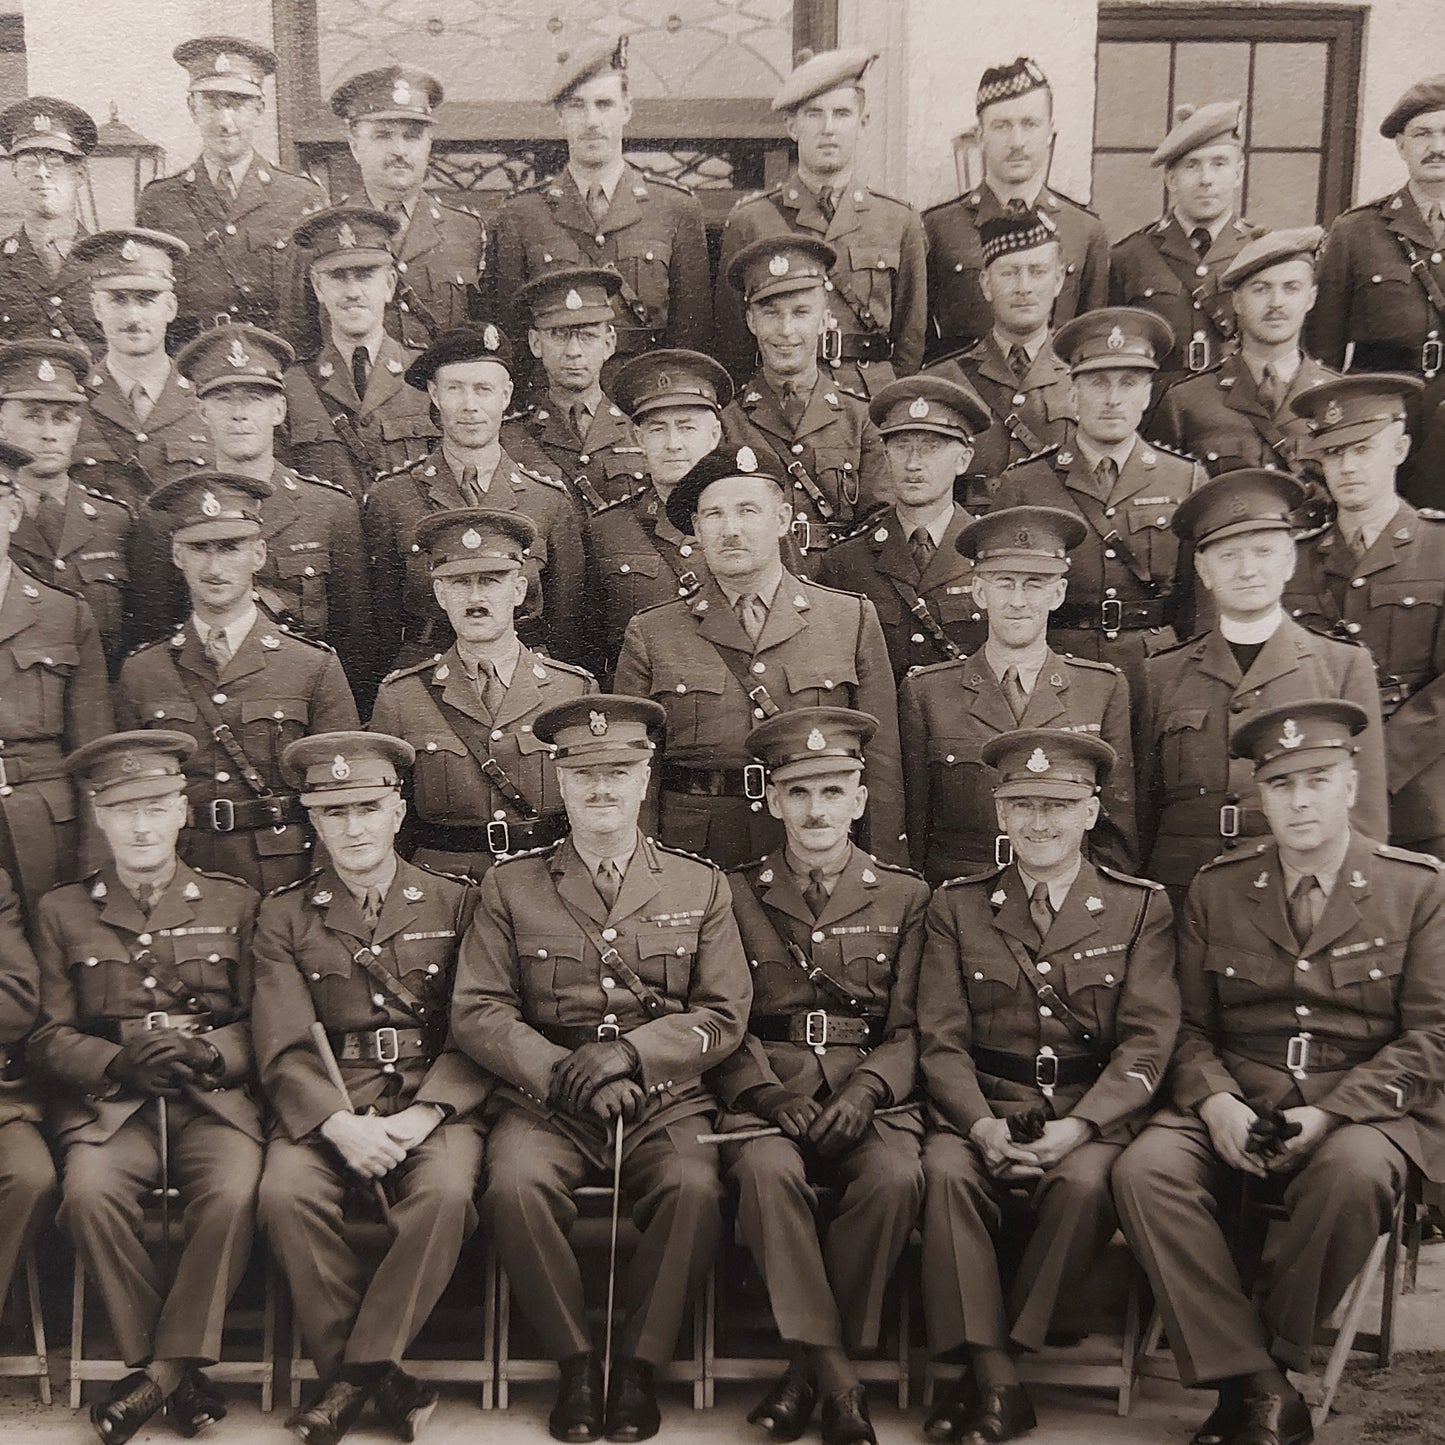 WW2 Staff Officers CITC Currie Barracks Calgary 1943